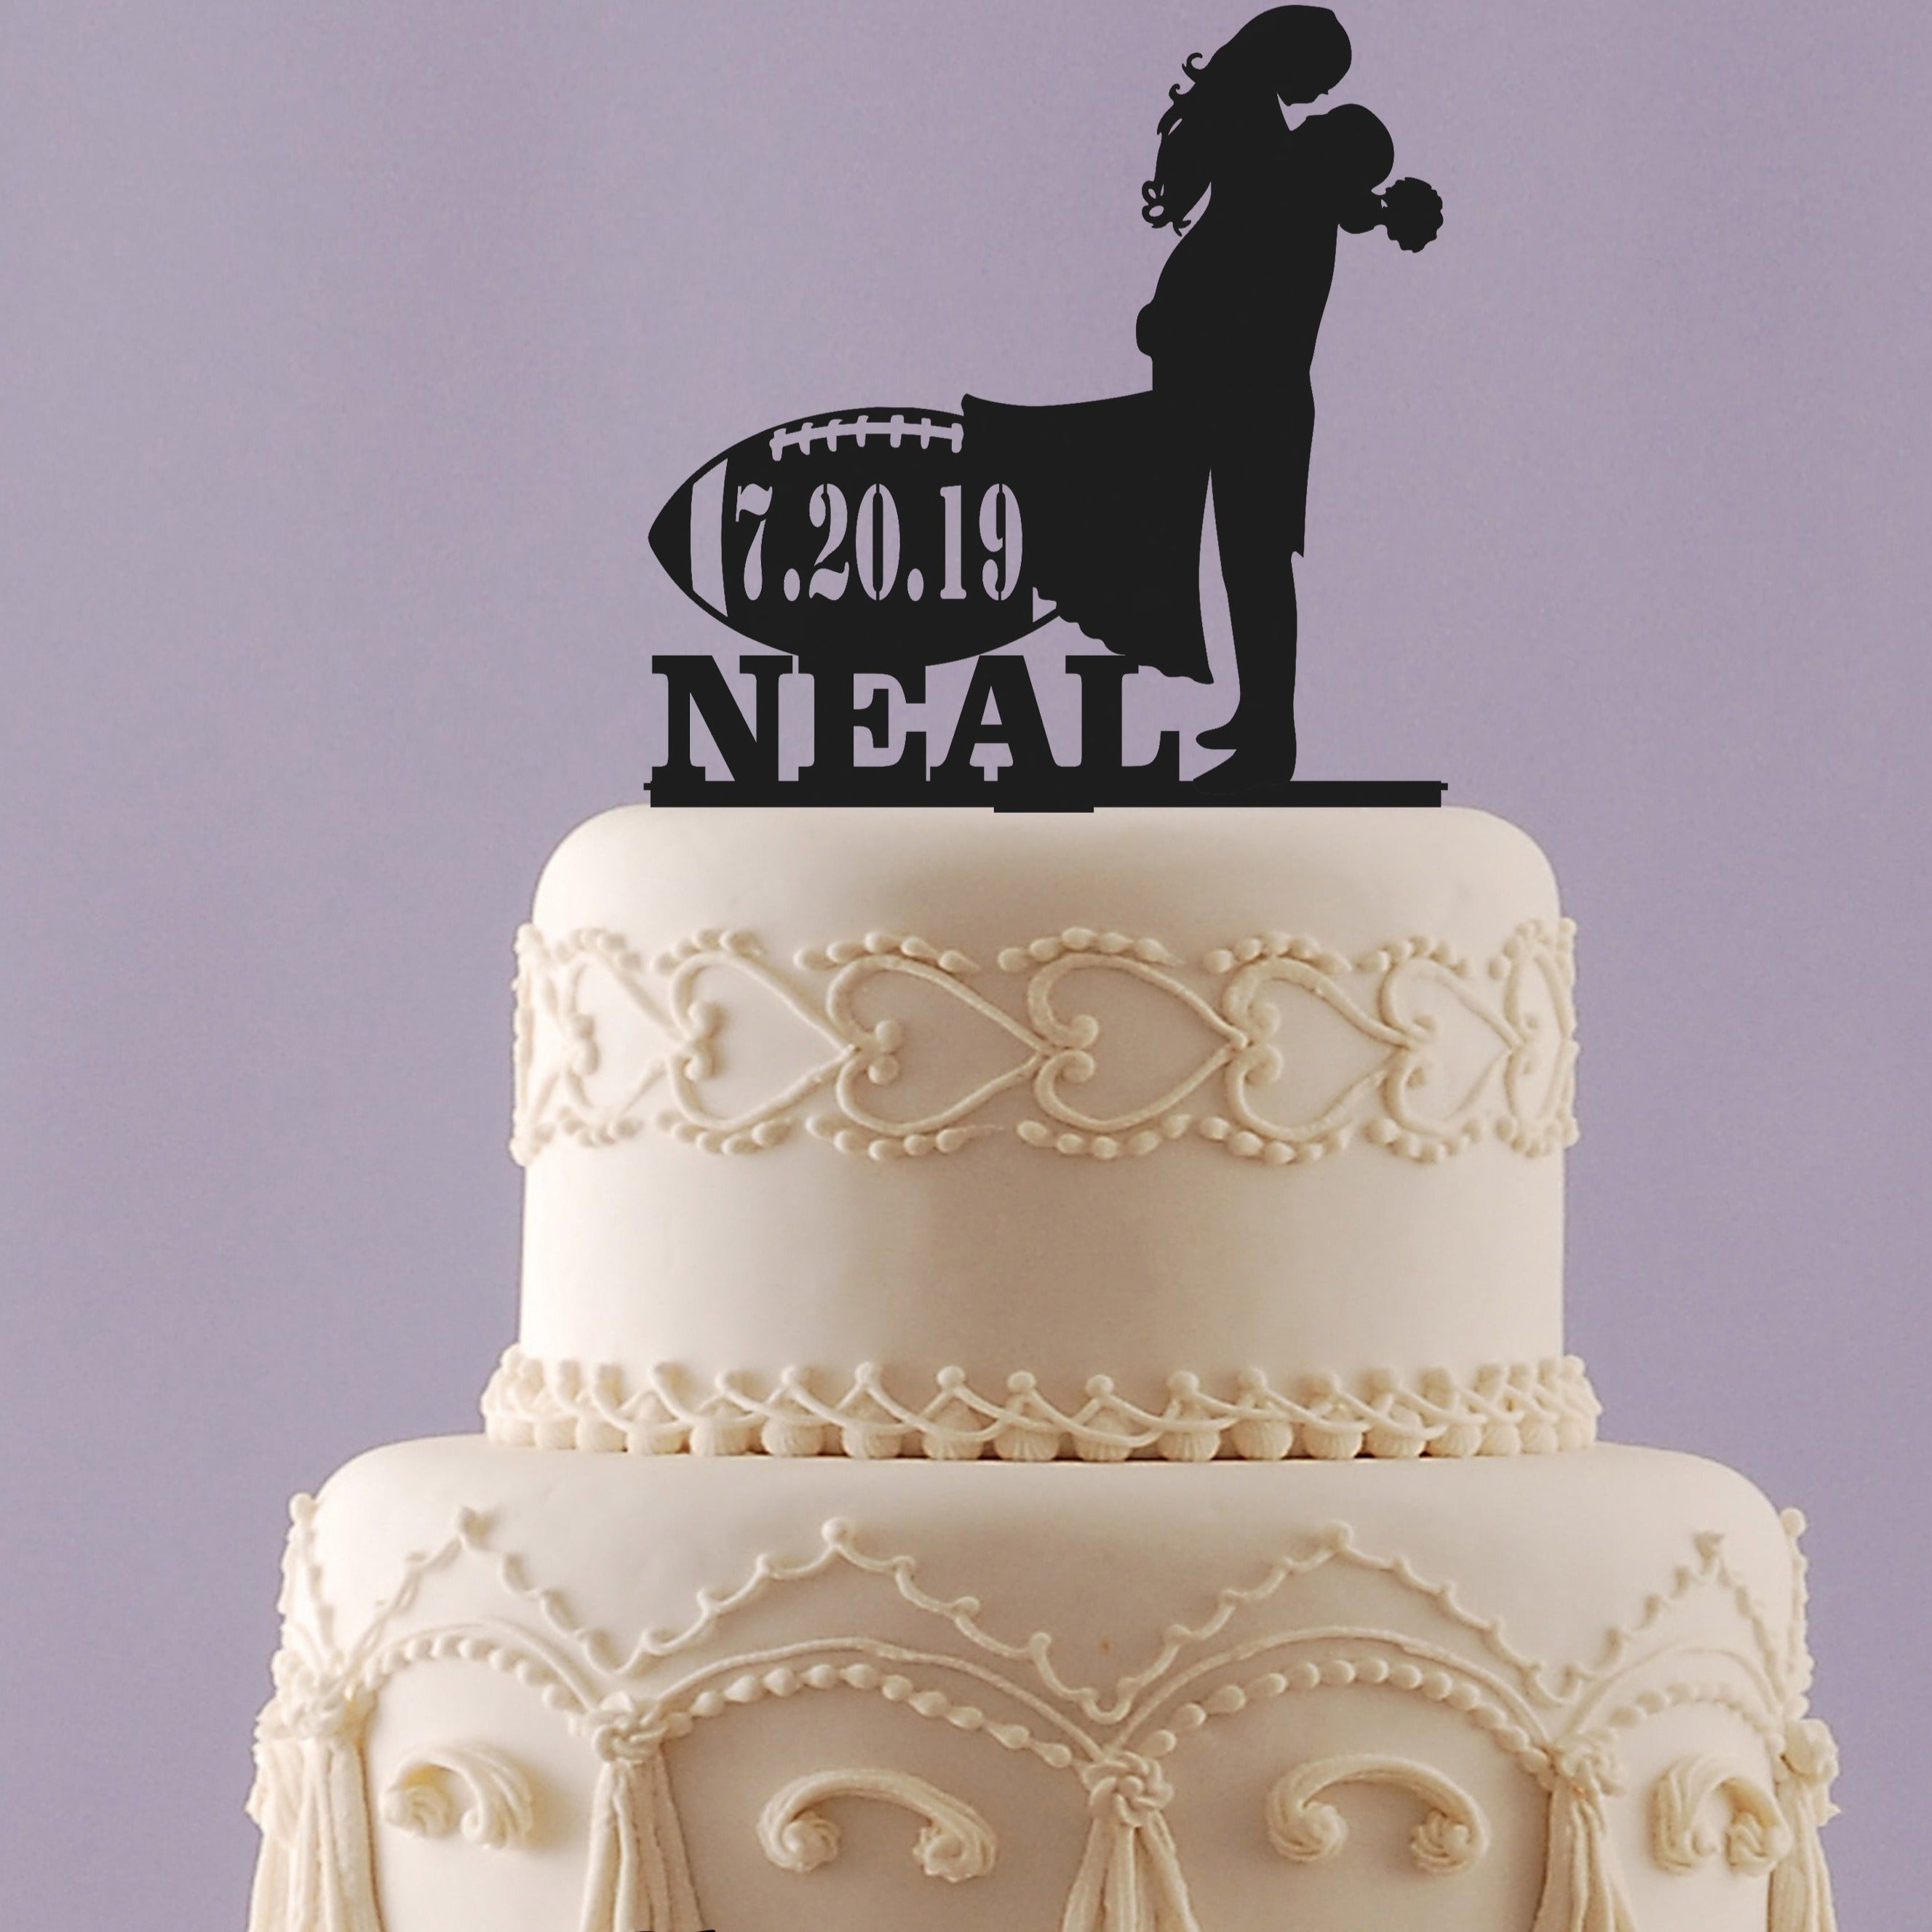 Birthday cake /wedding cake /graduation cake/engagement cake / elsa cake / soccer  cake / butterfly cake /Adam wednesday